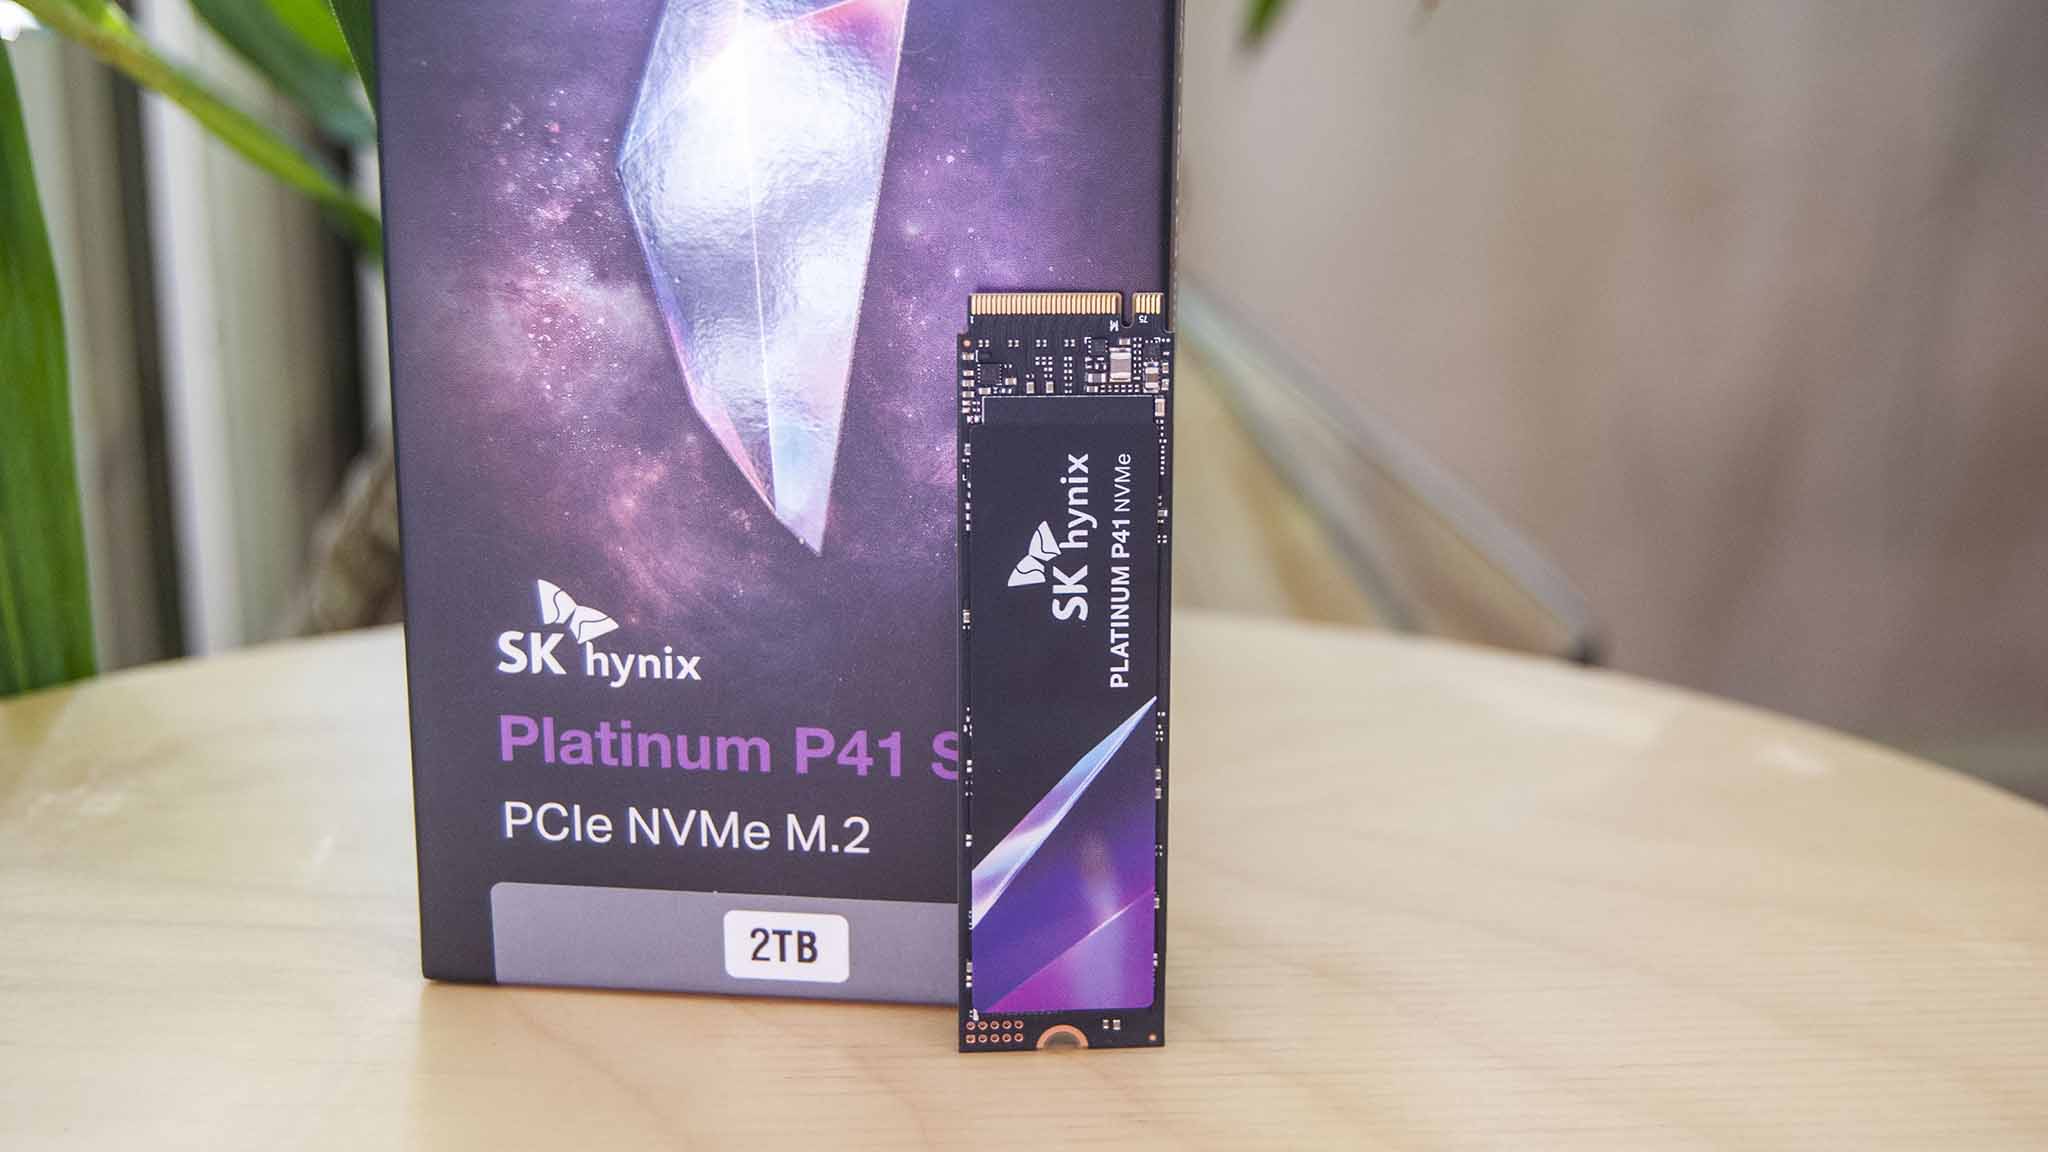 SK hynix Platinum P41 review